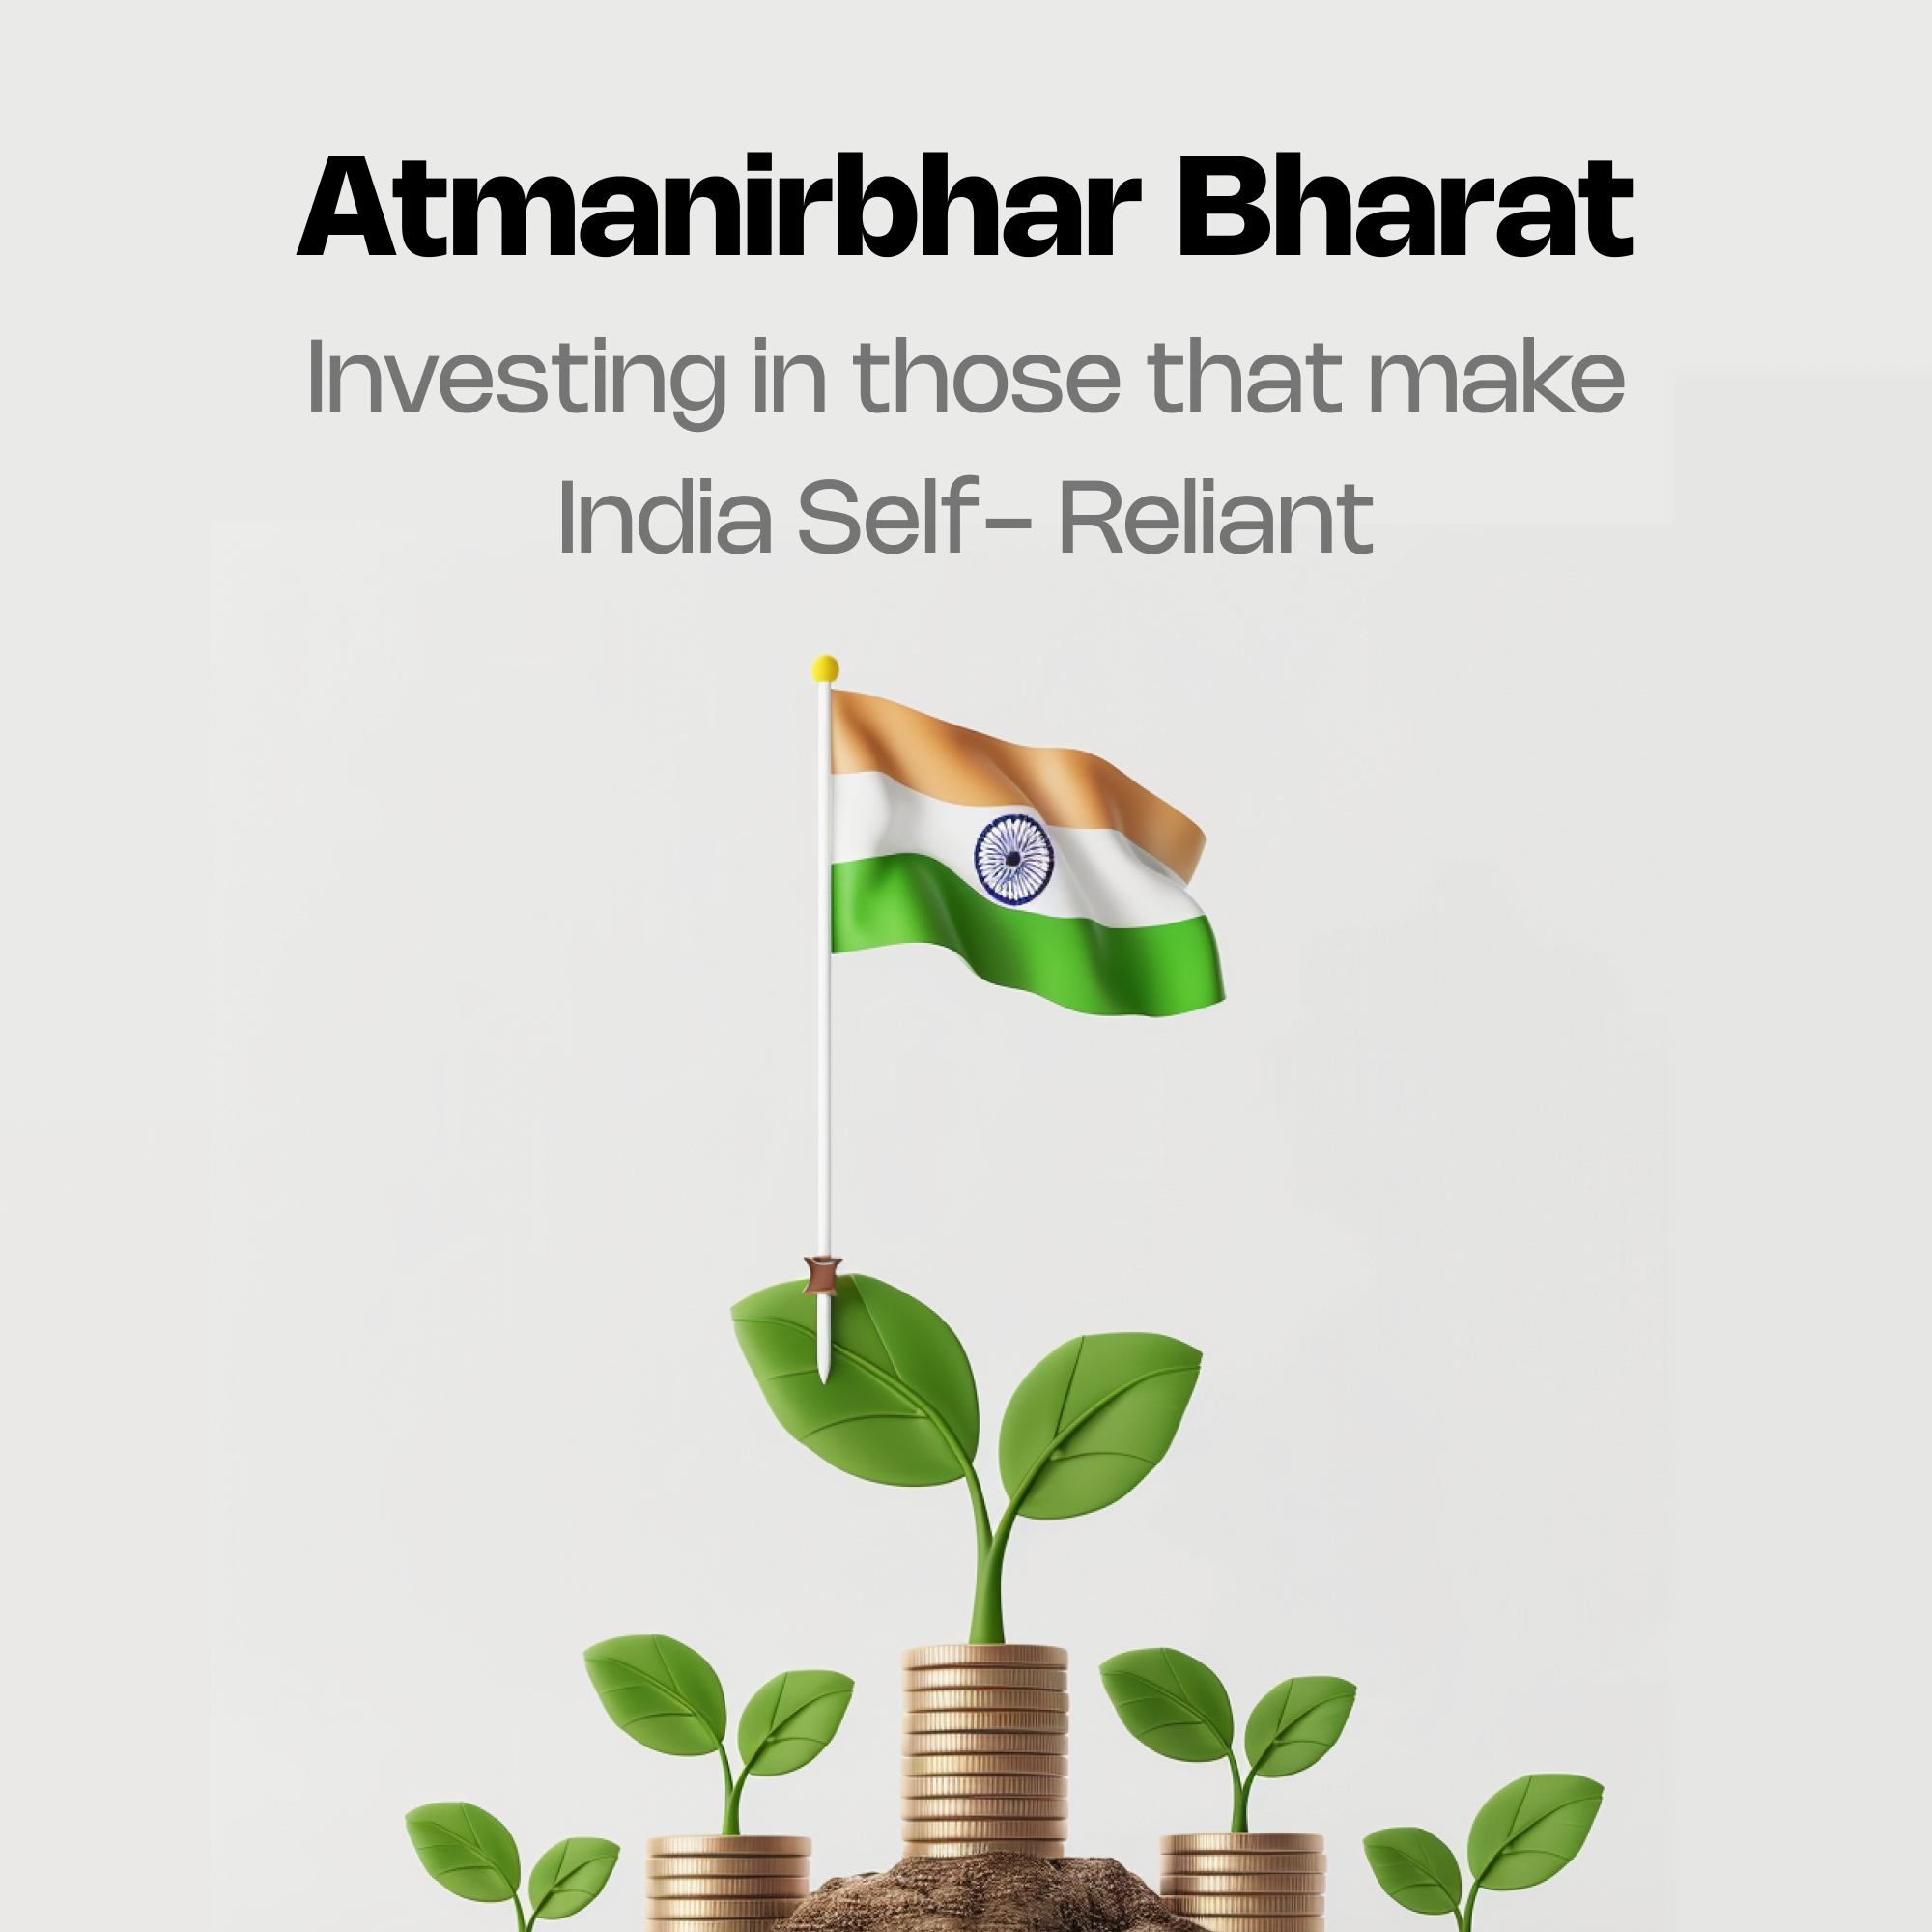 Atmanirbhar Bharat: Investing in those that make India Self- Reliant